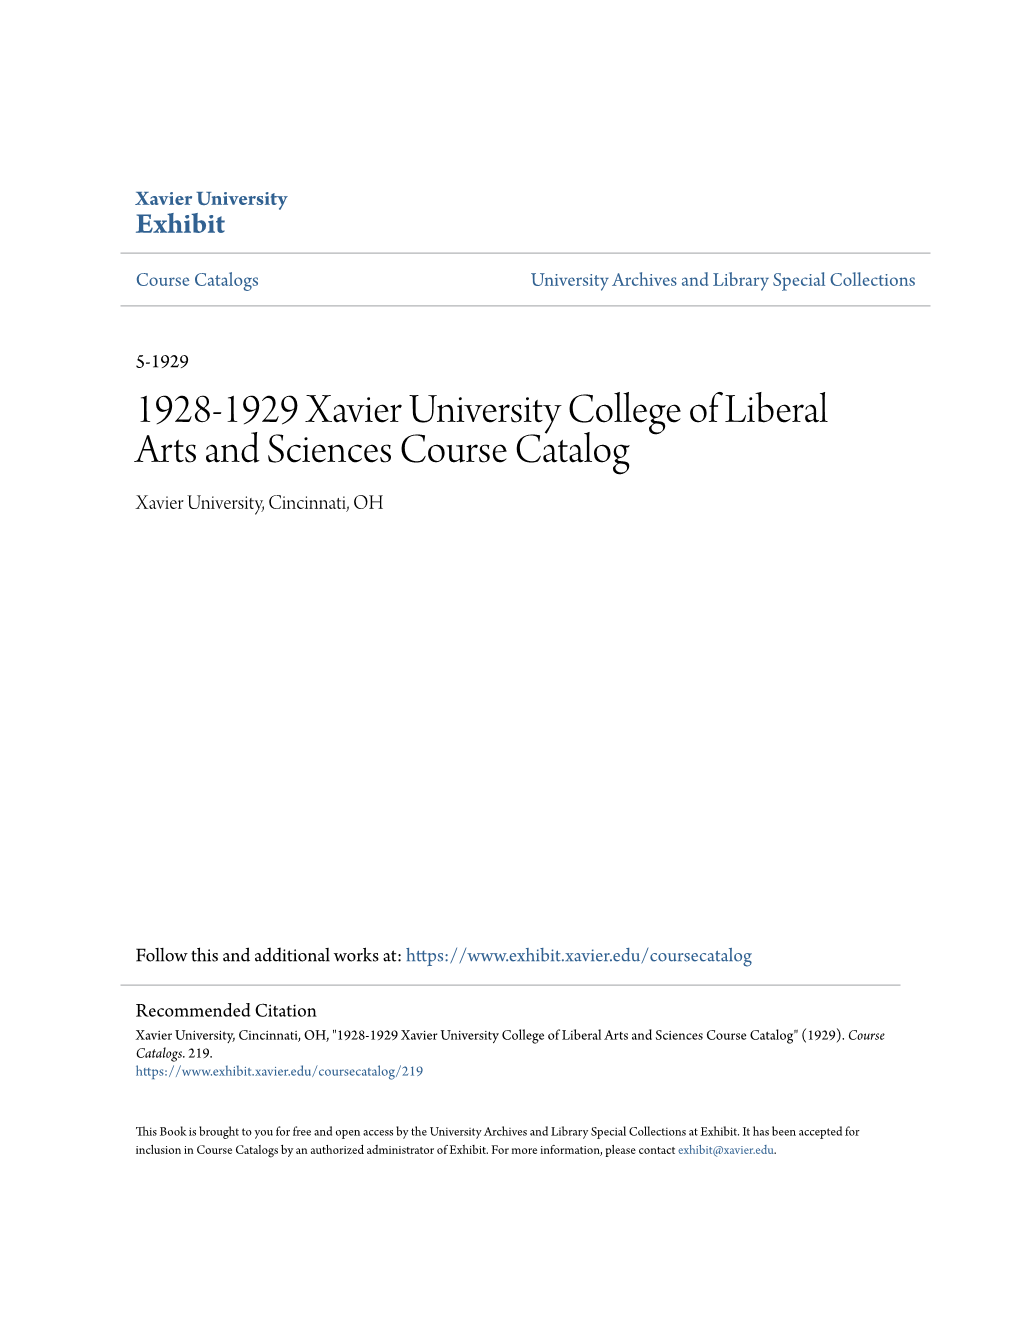 1928-1929 Xavier University College of Liberal Arts and Sciences Course Catalog Xavier University, Cincinnati, OH